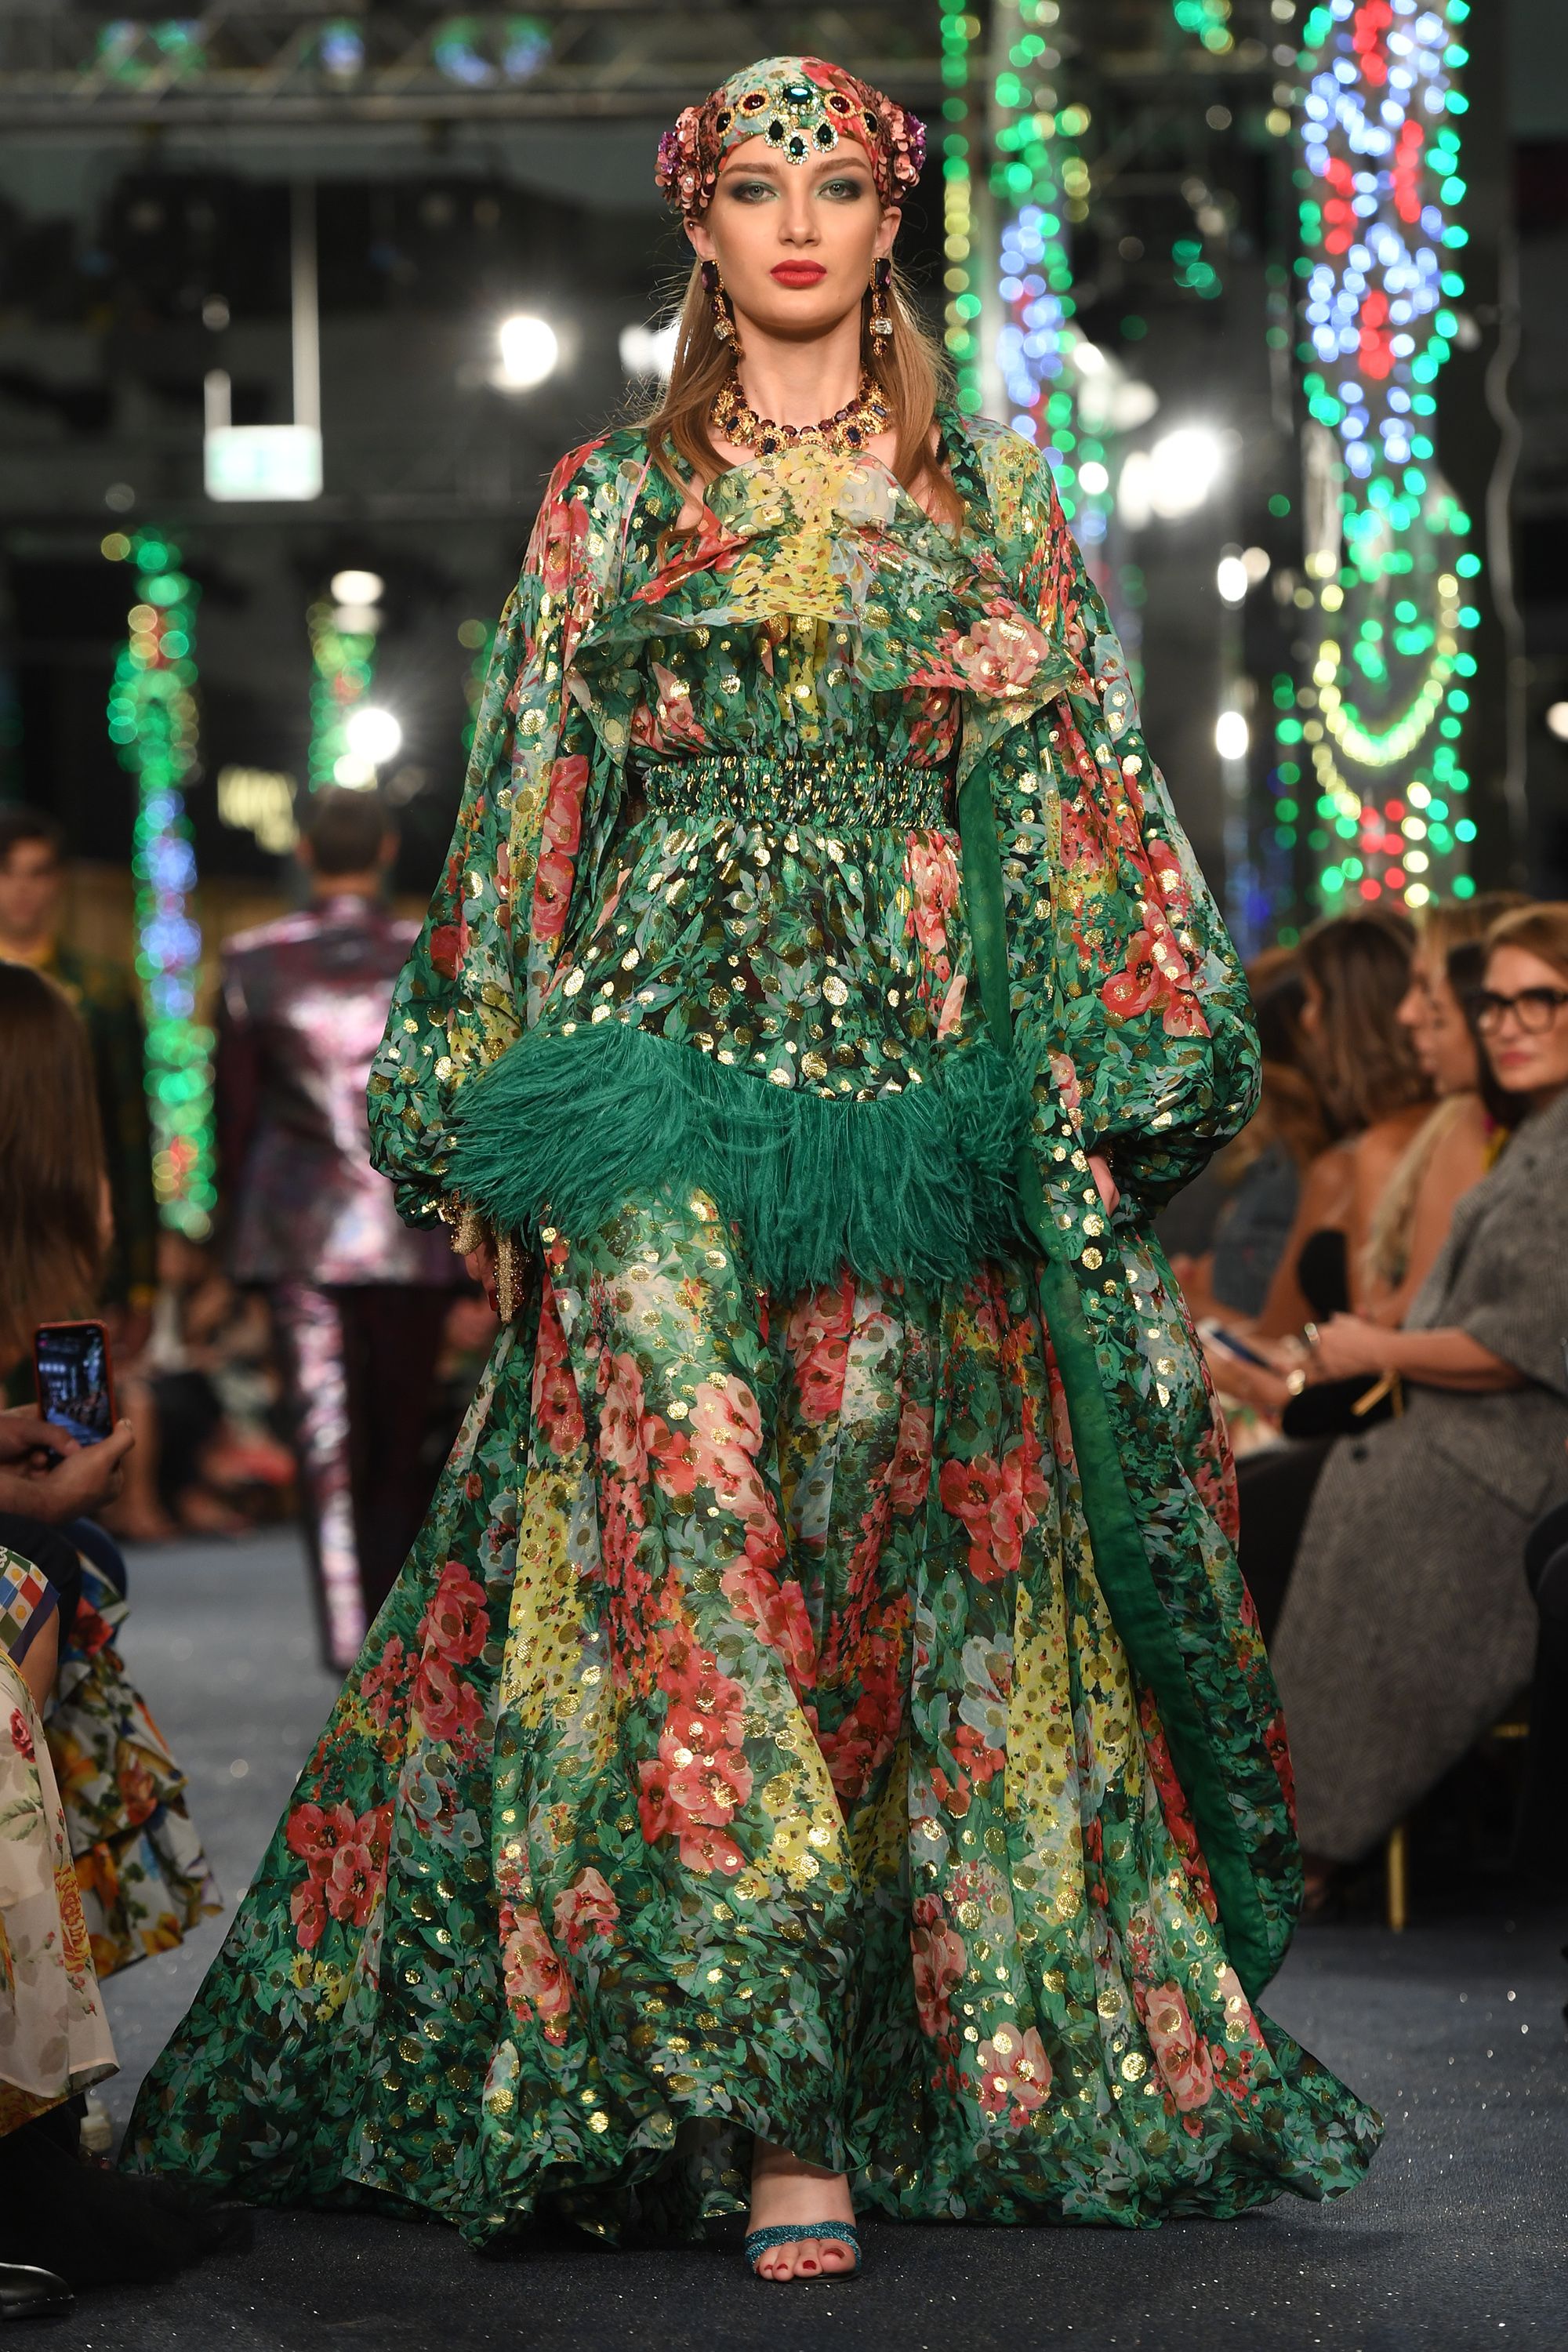 Dolce & Gabbana Fashion Show 2021: What the Stars Wore